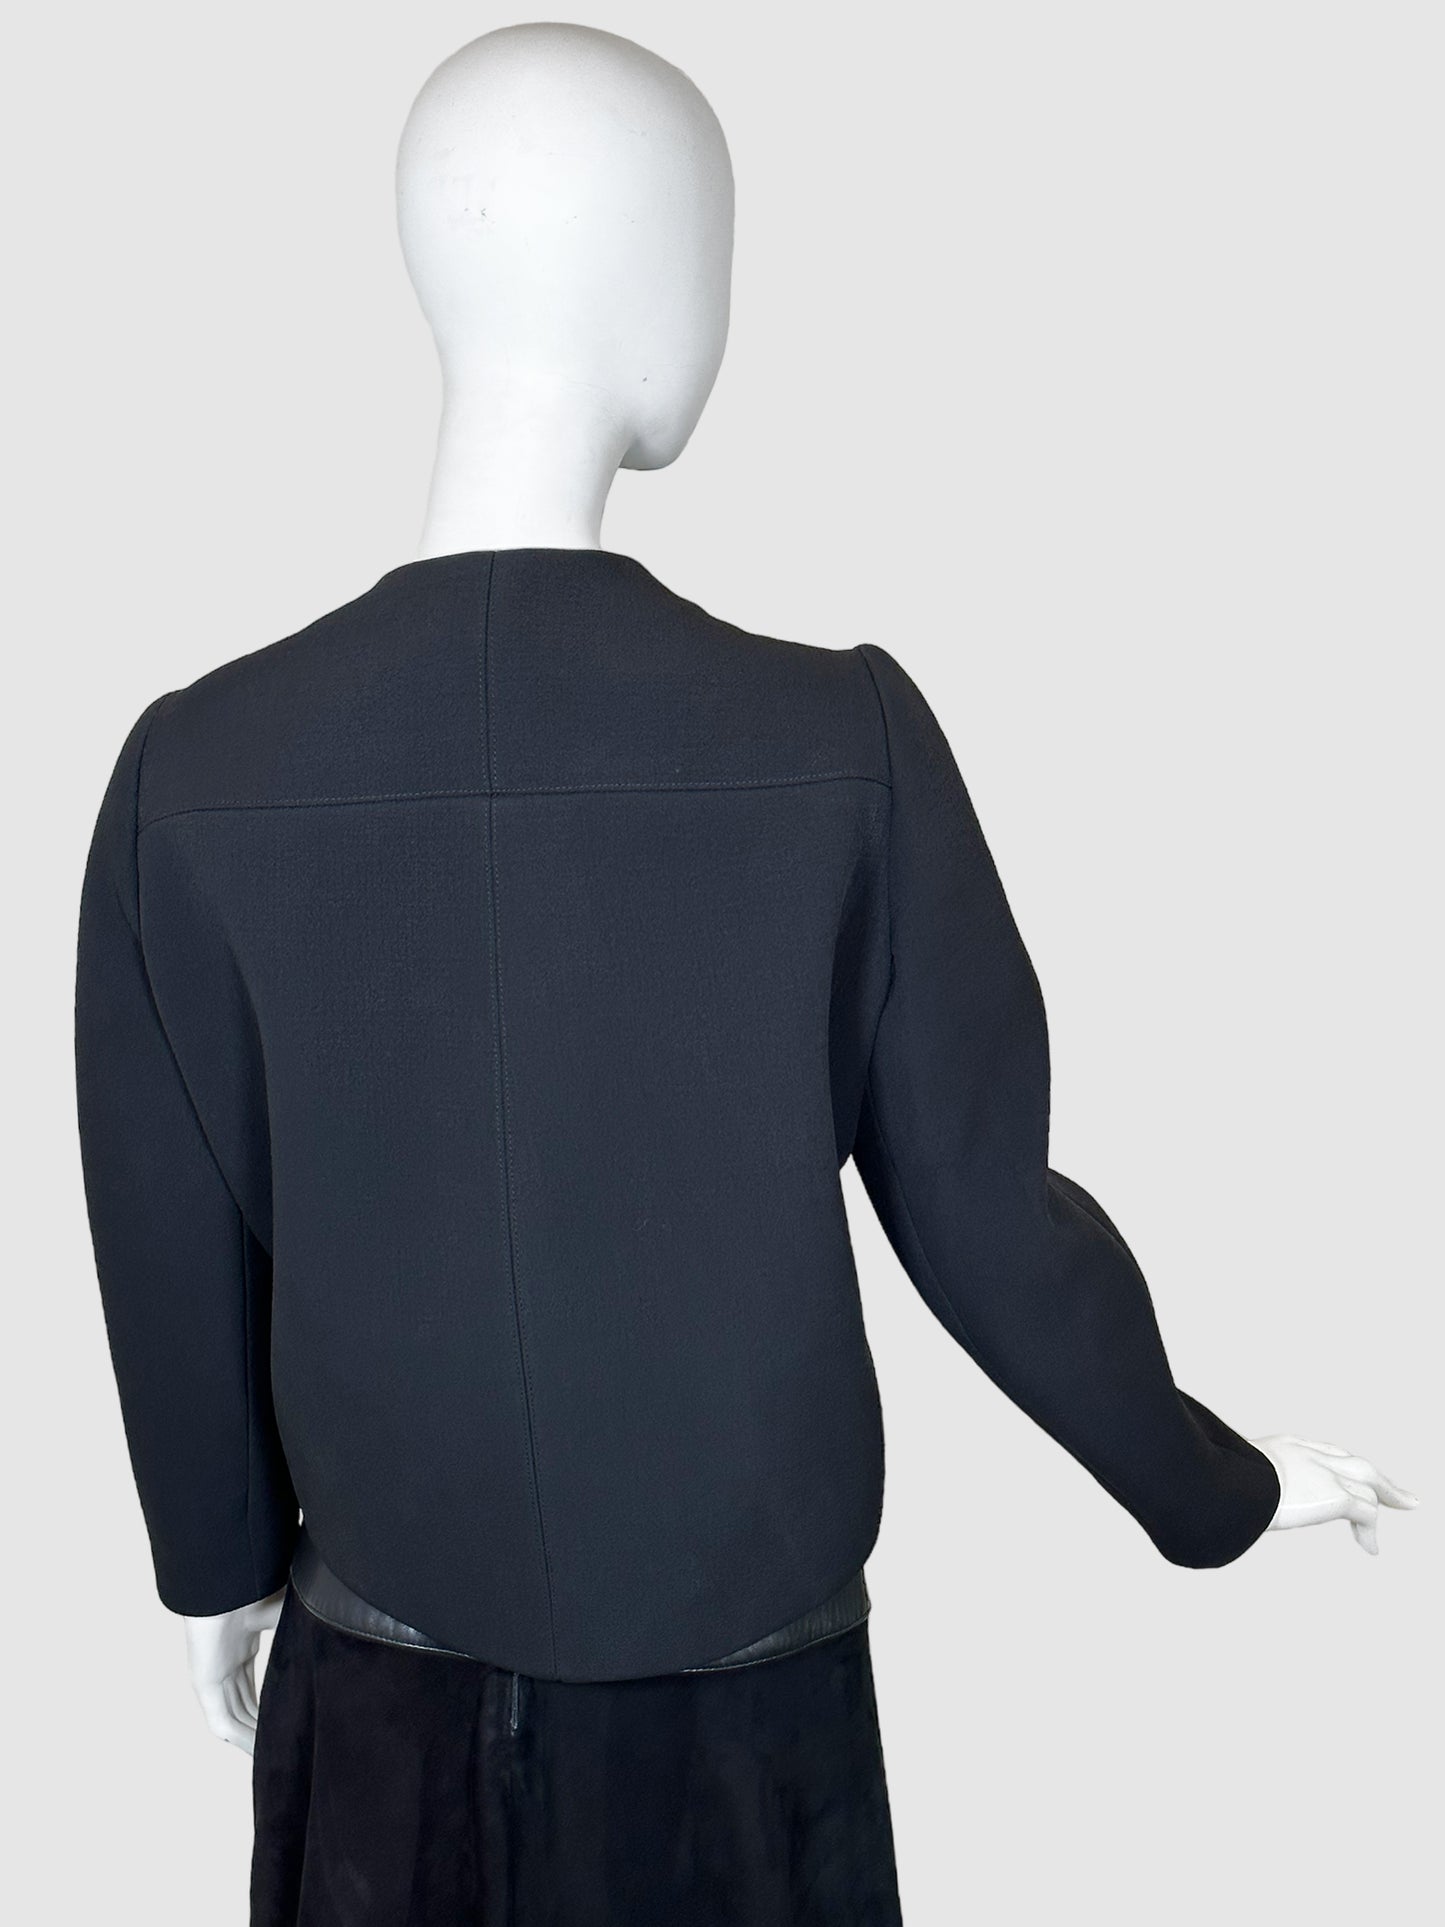 Balenciaga Contrast Wool-Blend Jacket - Size 40(S)